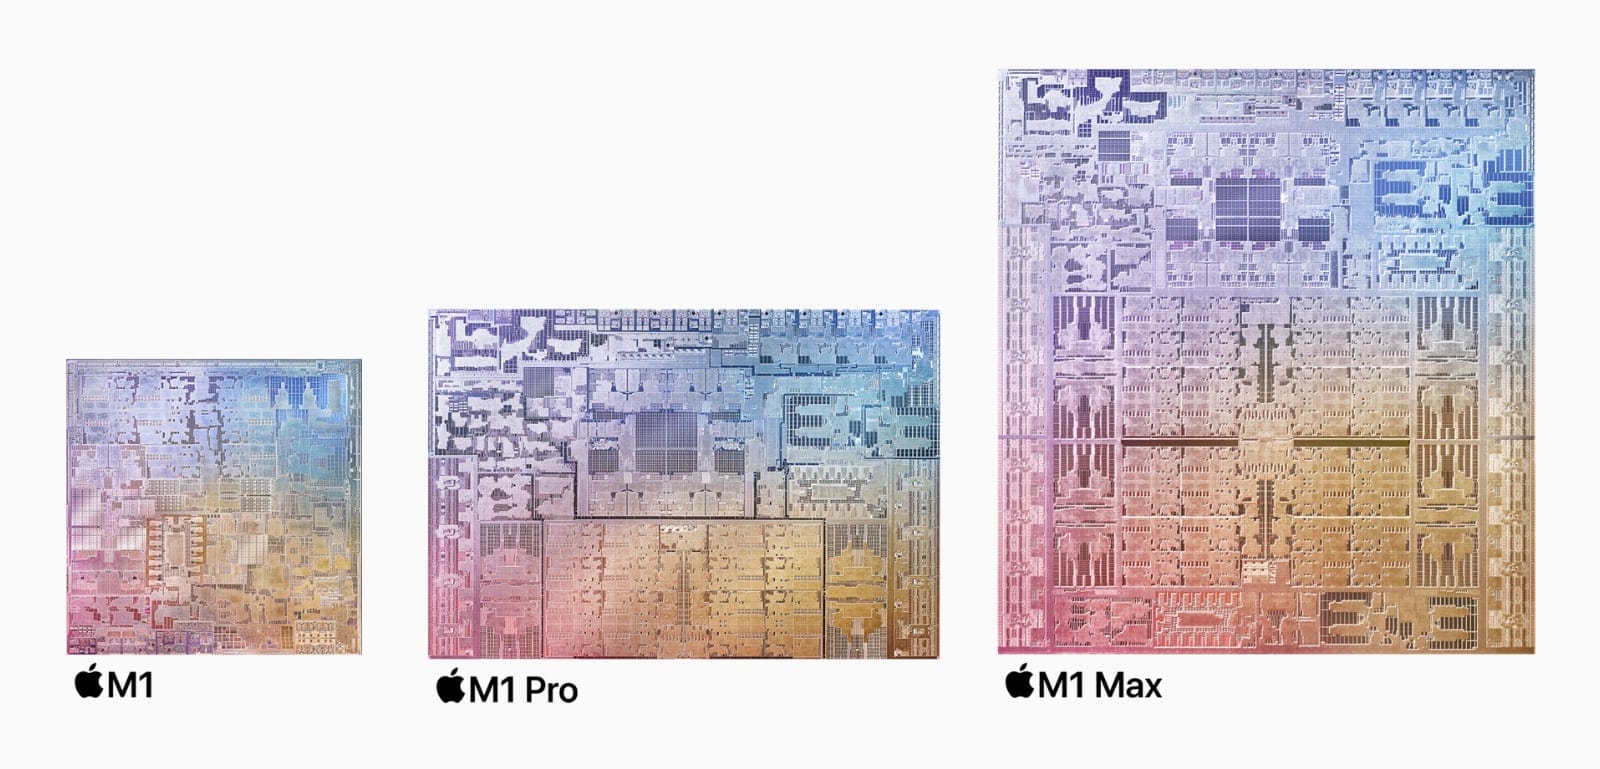 M1 M1 Pro M1 Max 칩 크기 비교